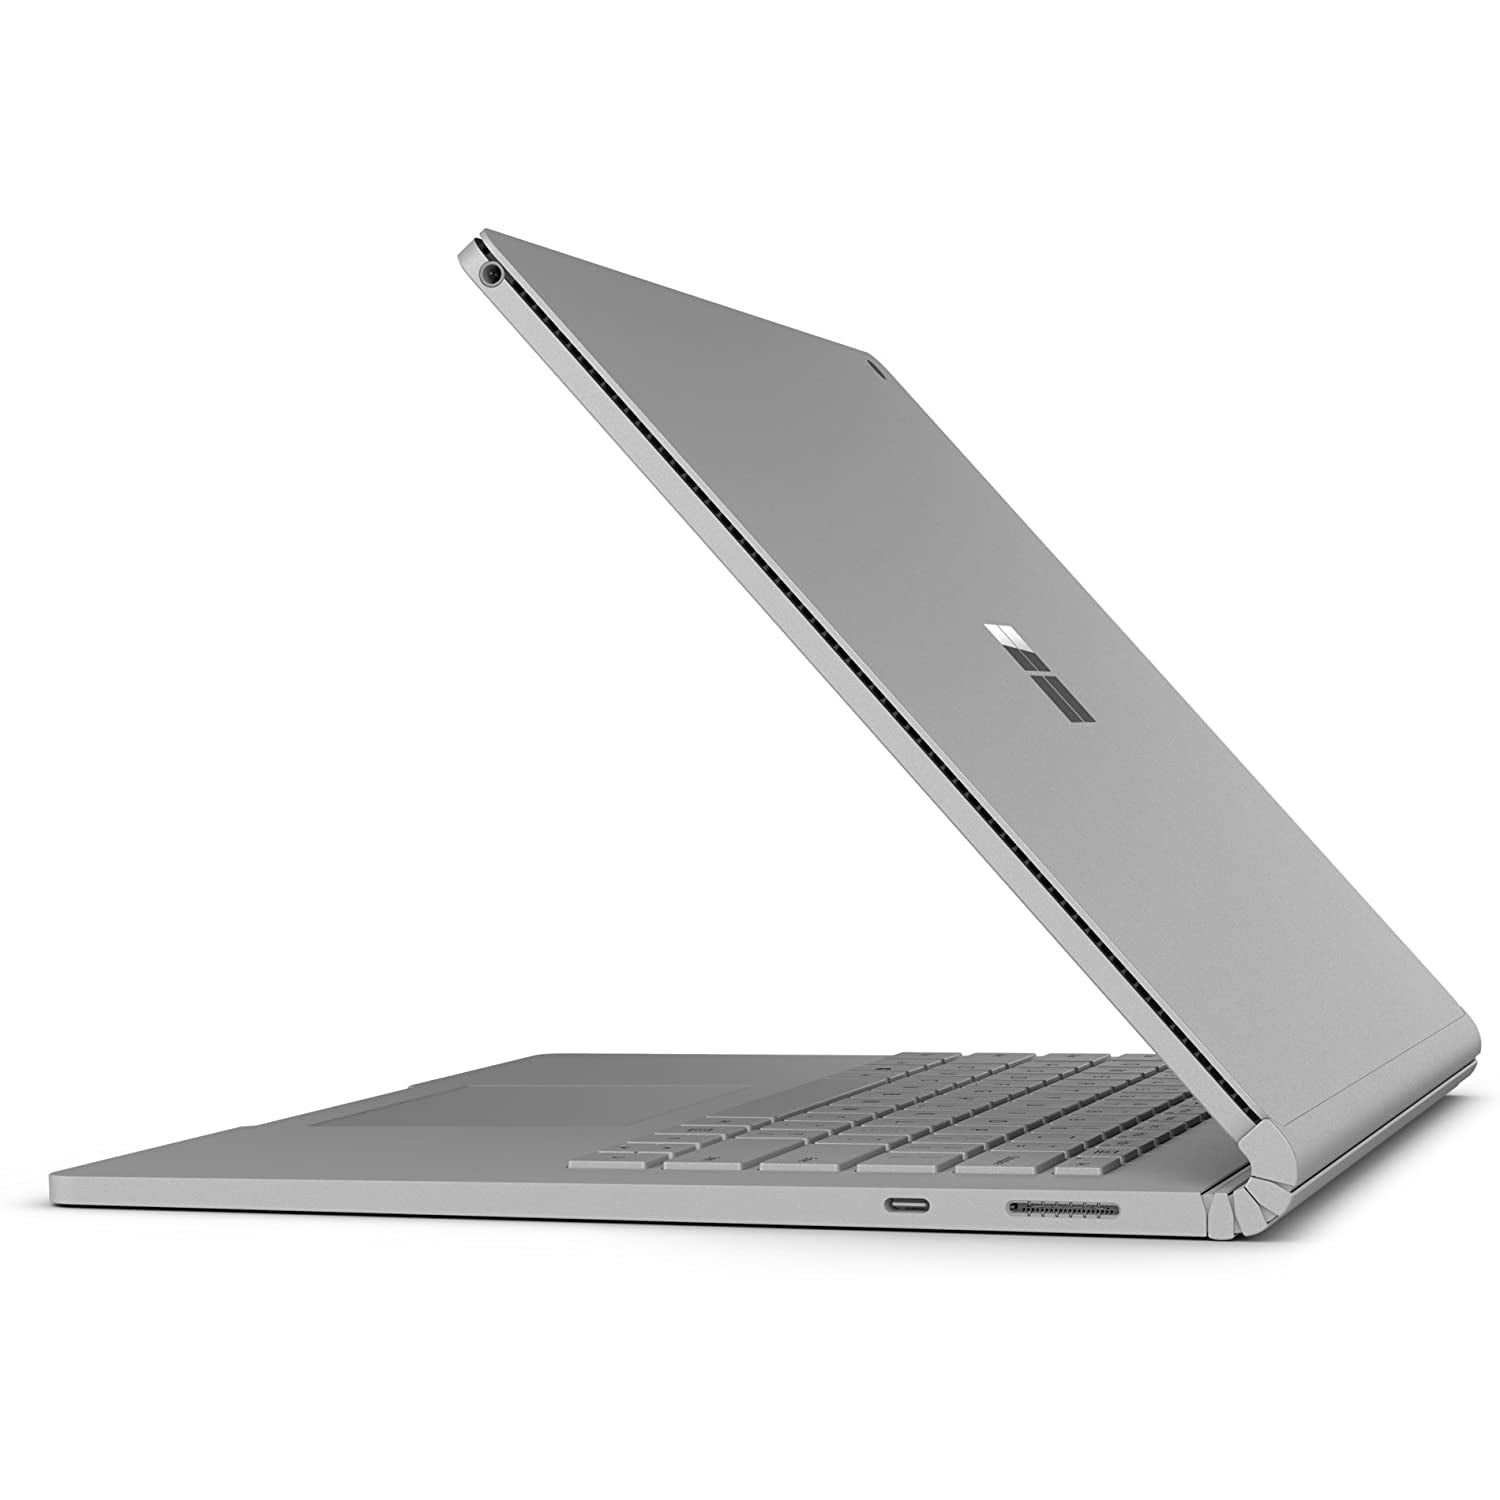 Microsoft Surface Book, Intel Core i5, 8GB RAM, 128GB SSD, 13.5", Silver